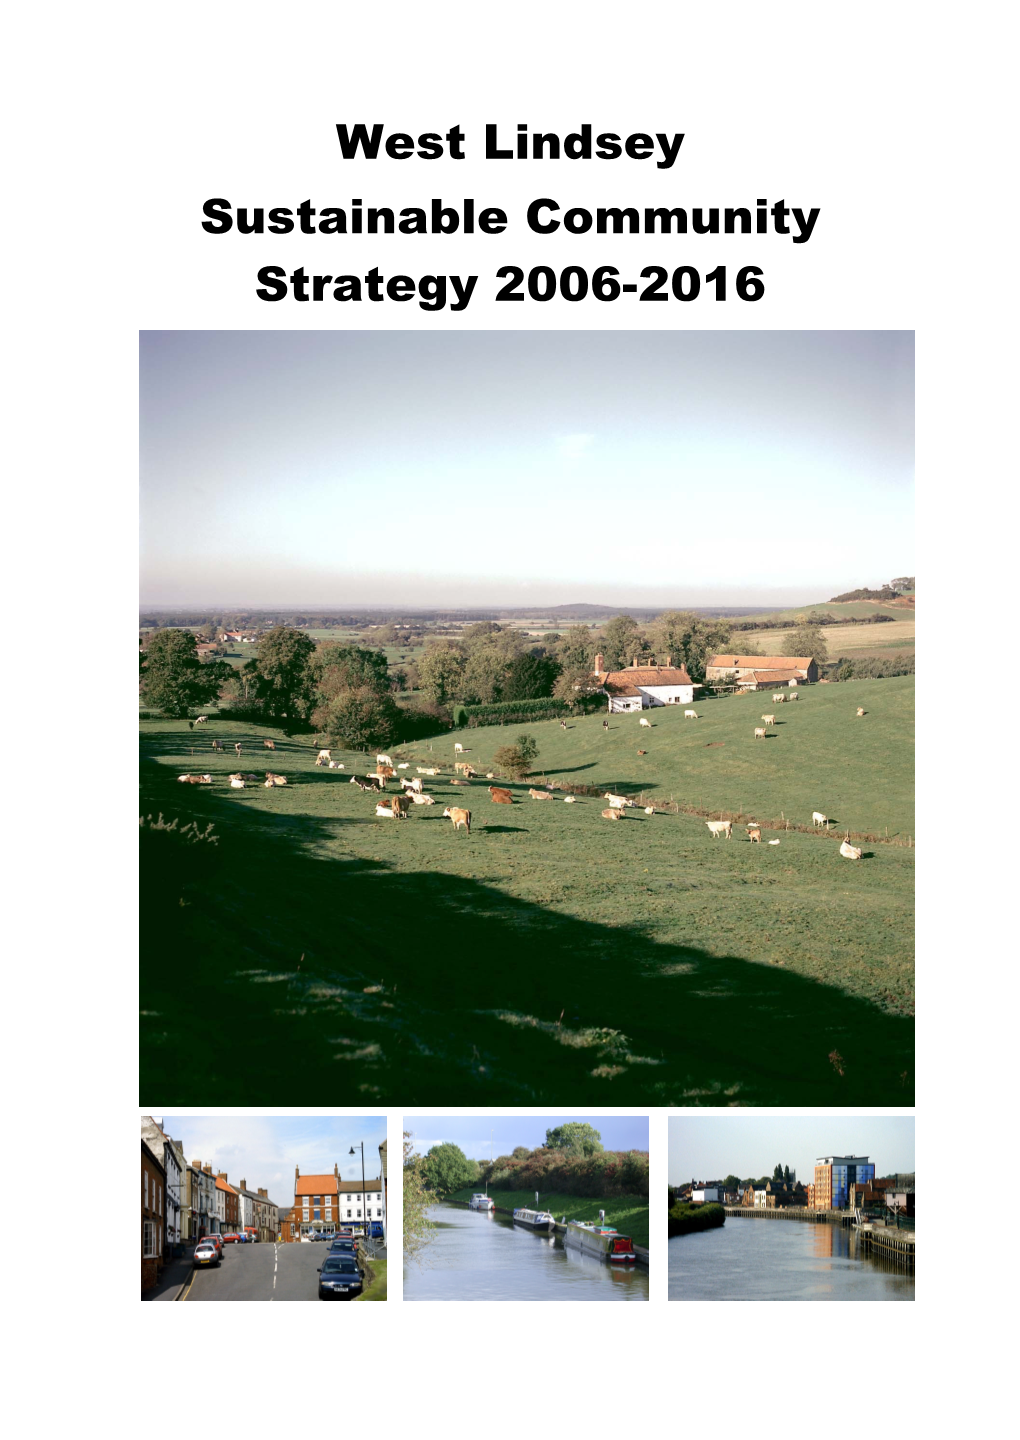 Full WLDC Sustainable Community Strategy 2006-2016